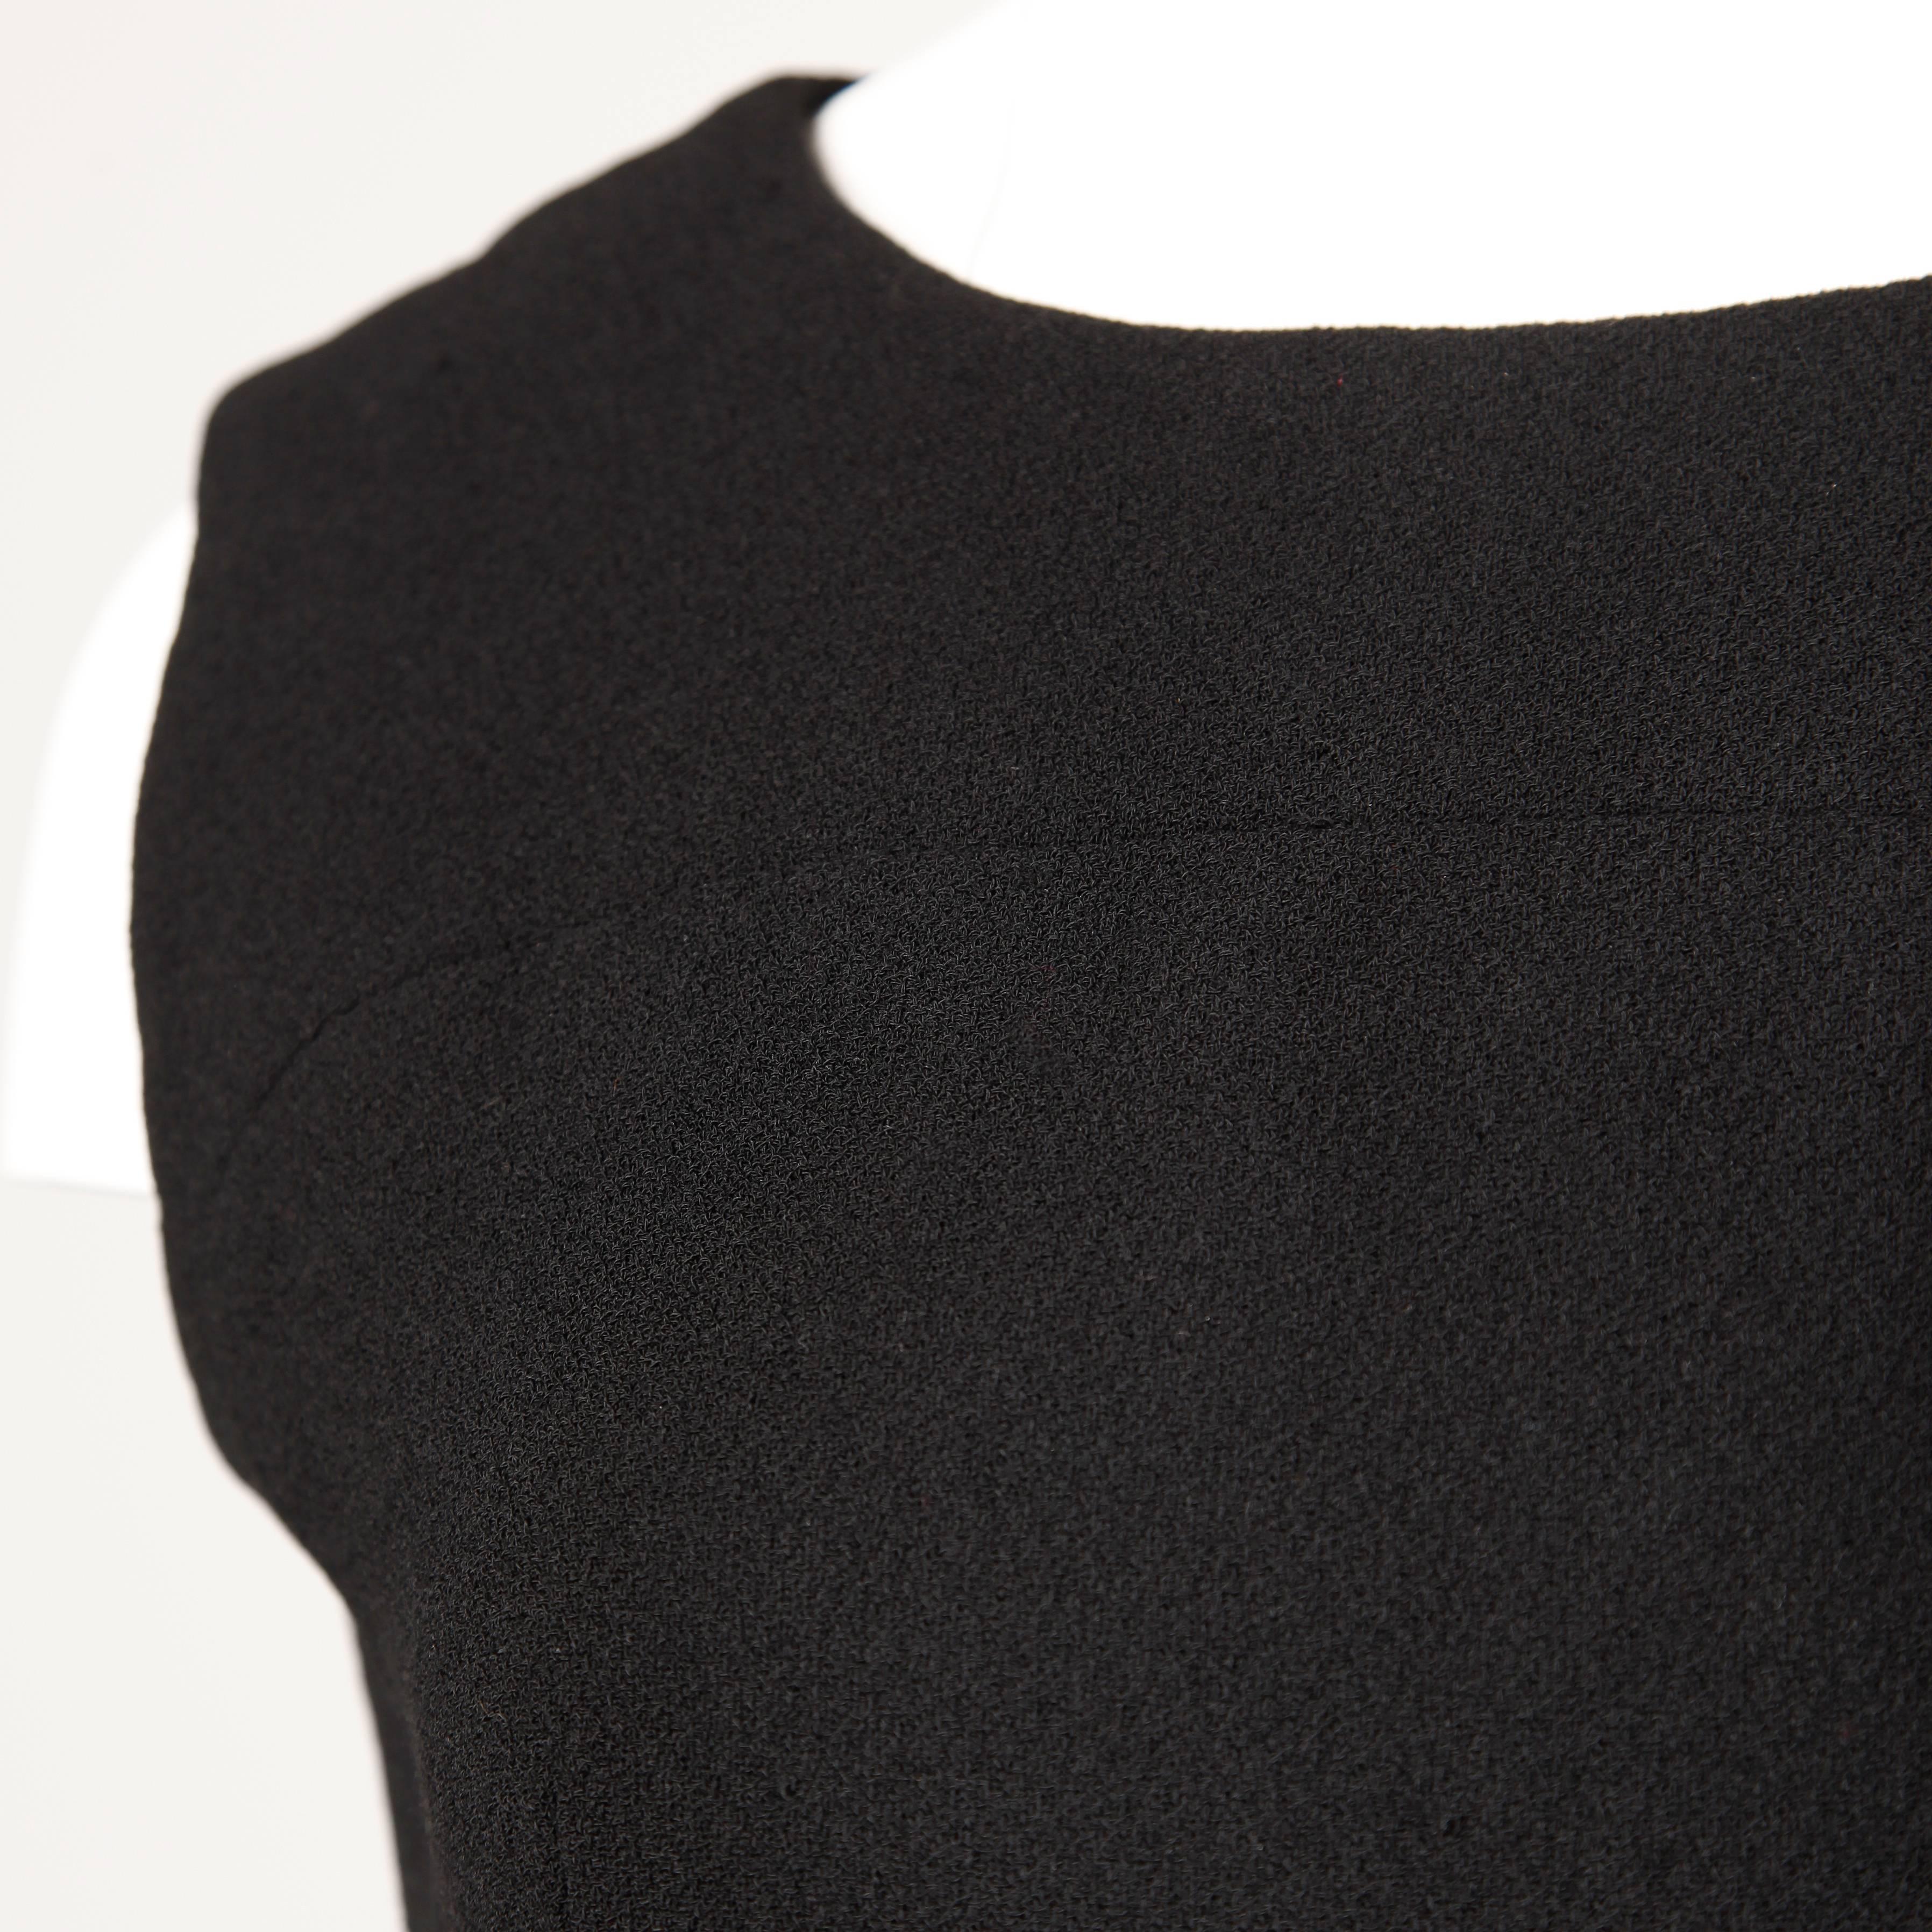 Norman Norell 1960s Vintage Black Wool + Silk Satin Sheath Dress 1